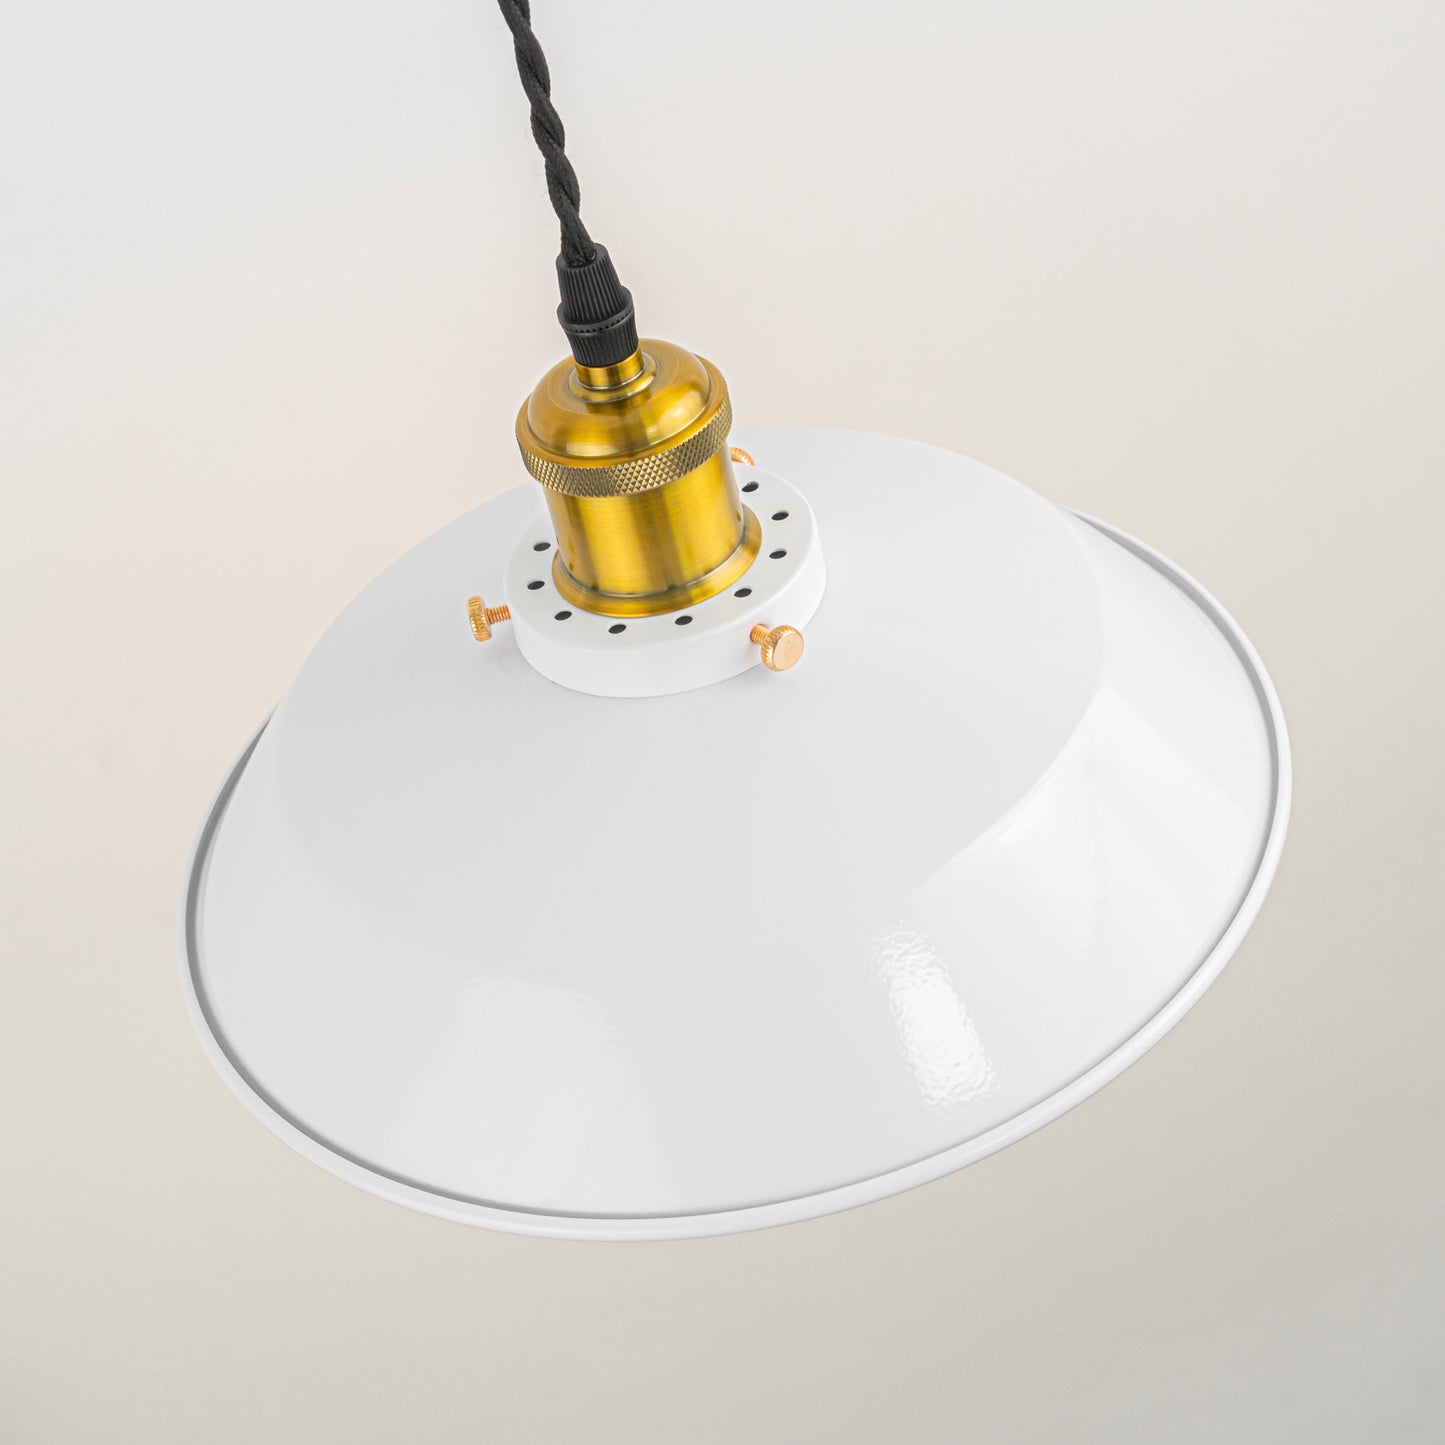 FSLiving カフェー雰囲気 ホワイト ペンダントライト  コード収納フレンジ付き 吊り下げ ライト E26 キッチン  ダクトレールライト LED 電気